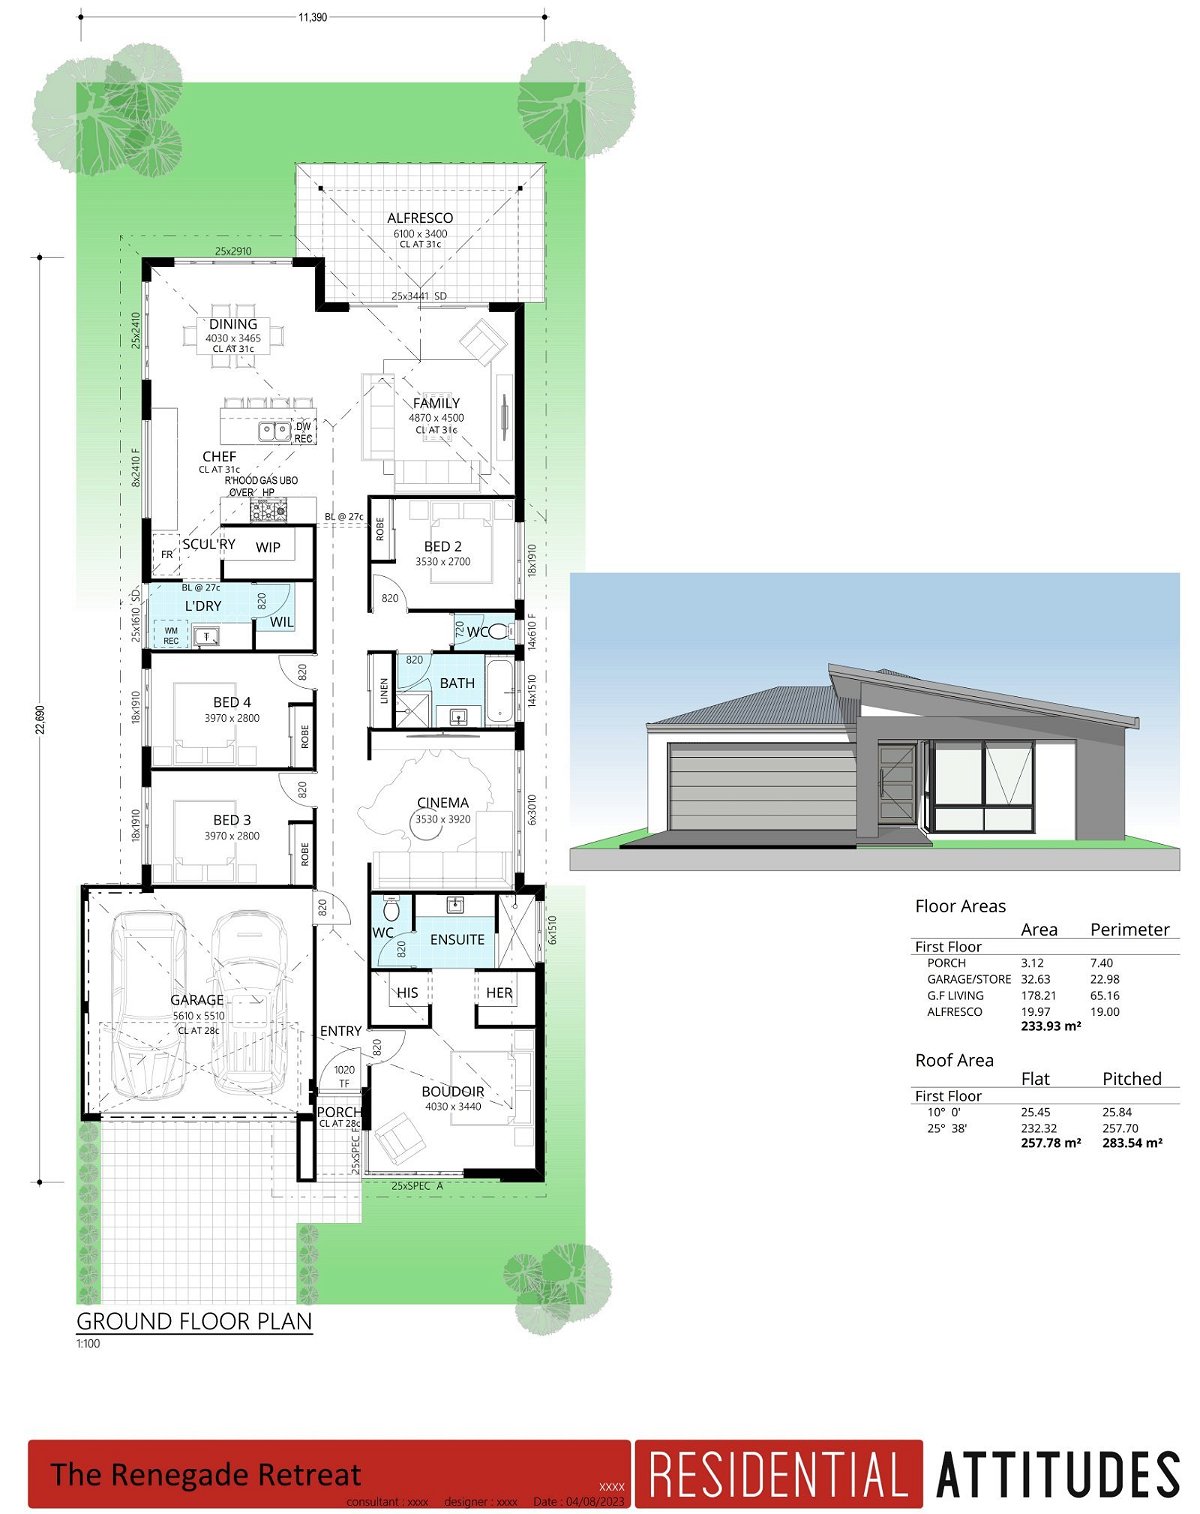 Residential Attitudes -  - Floorplan - Renegade Retreat Floorplan